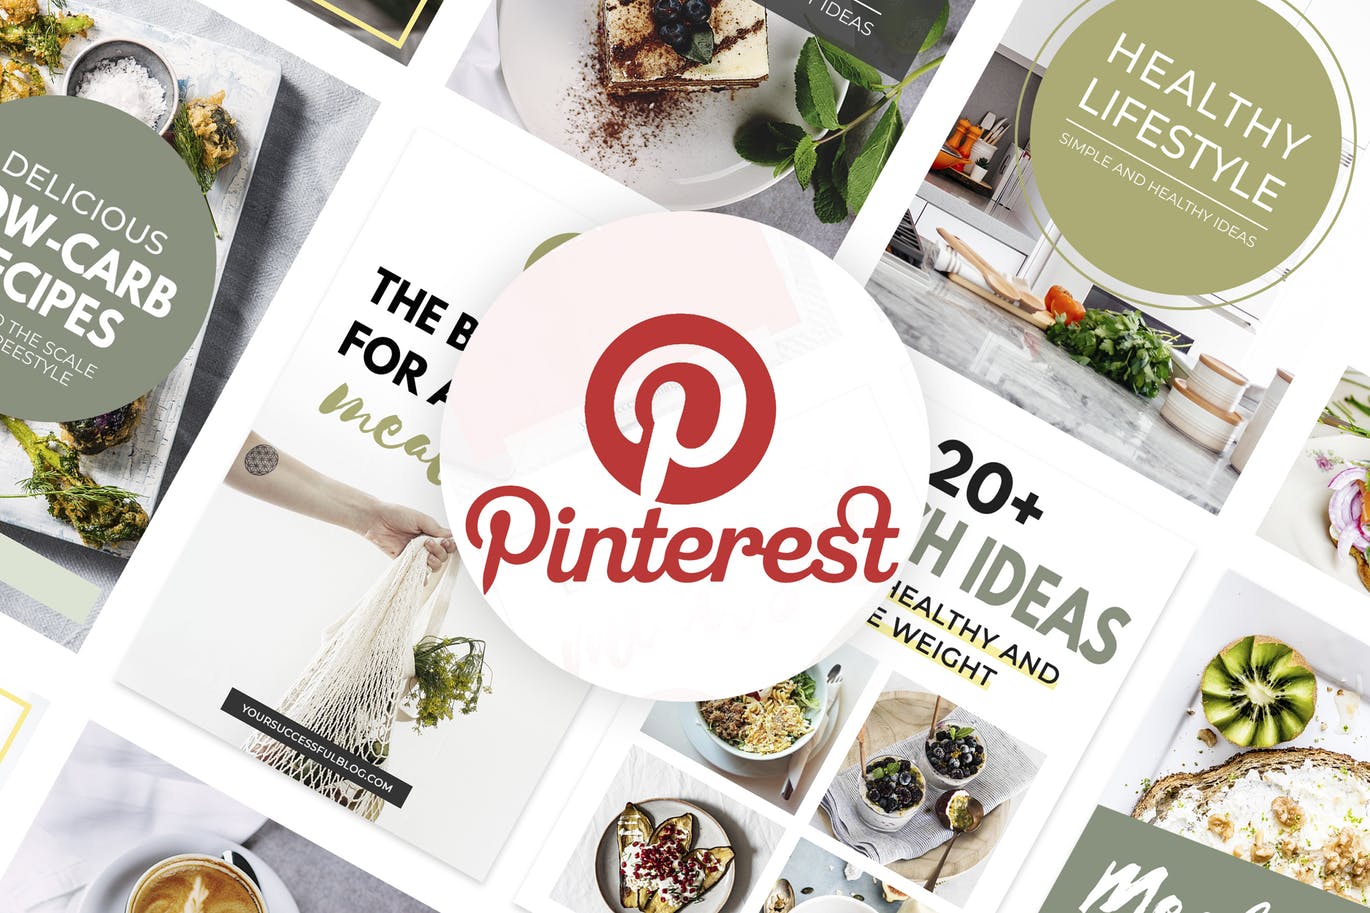 Pinterest图钉社交平台美食品牌推广设计模板素材库精选v3 Canva Pinterest Templates V.3插图(4)